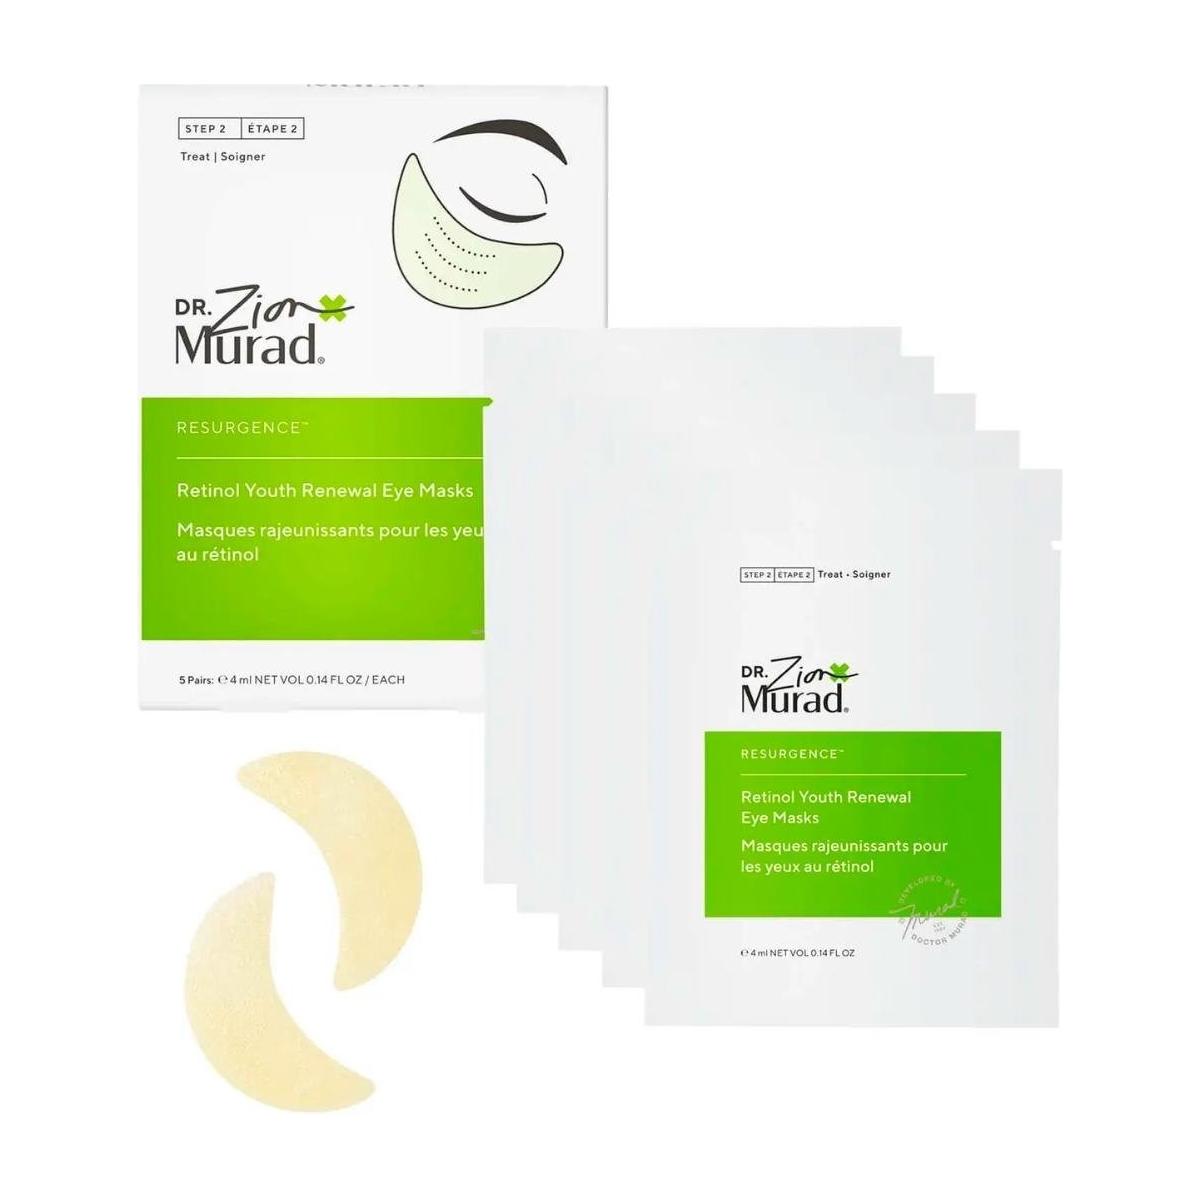 Murad | Retinol Youth Renewal Eye Masks | 5 Pack - DG International Ventures Limited